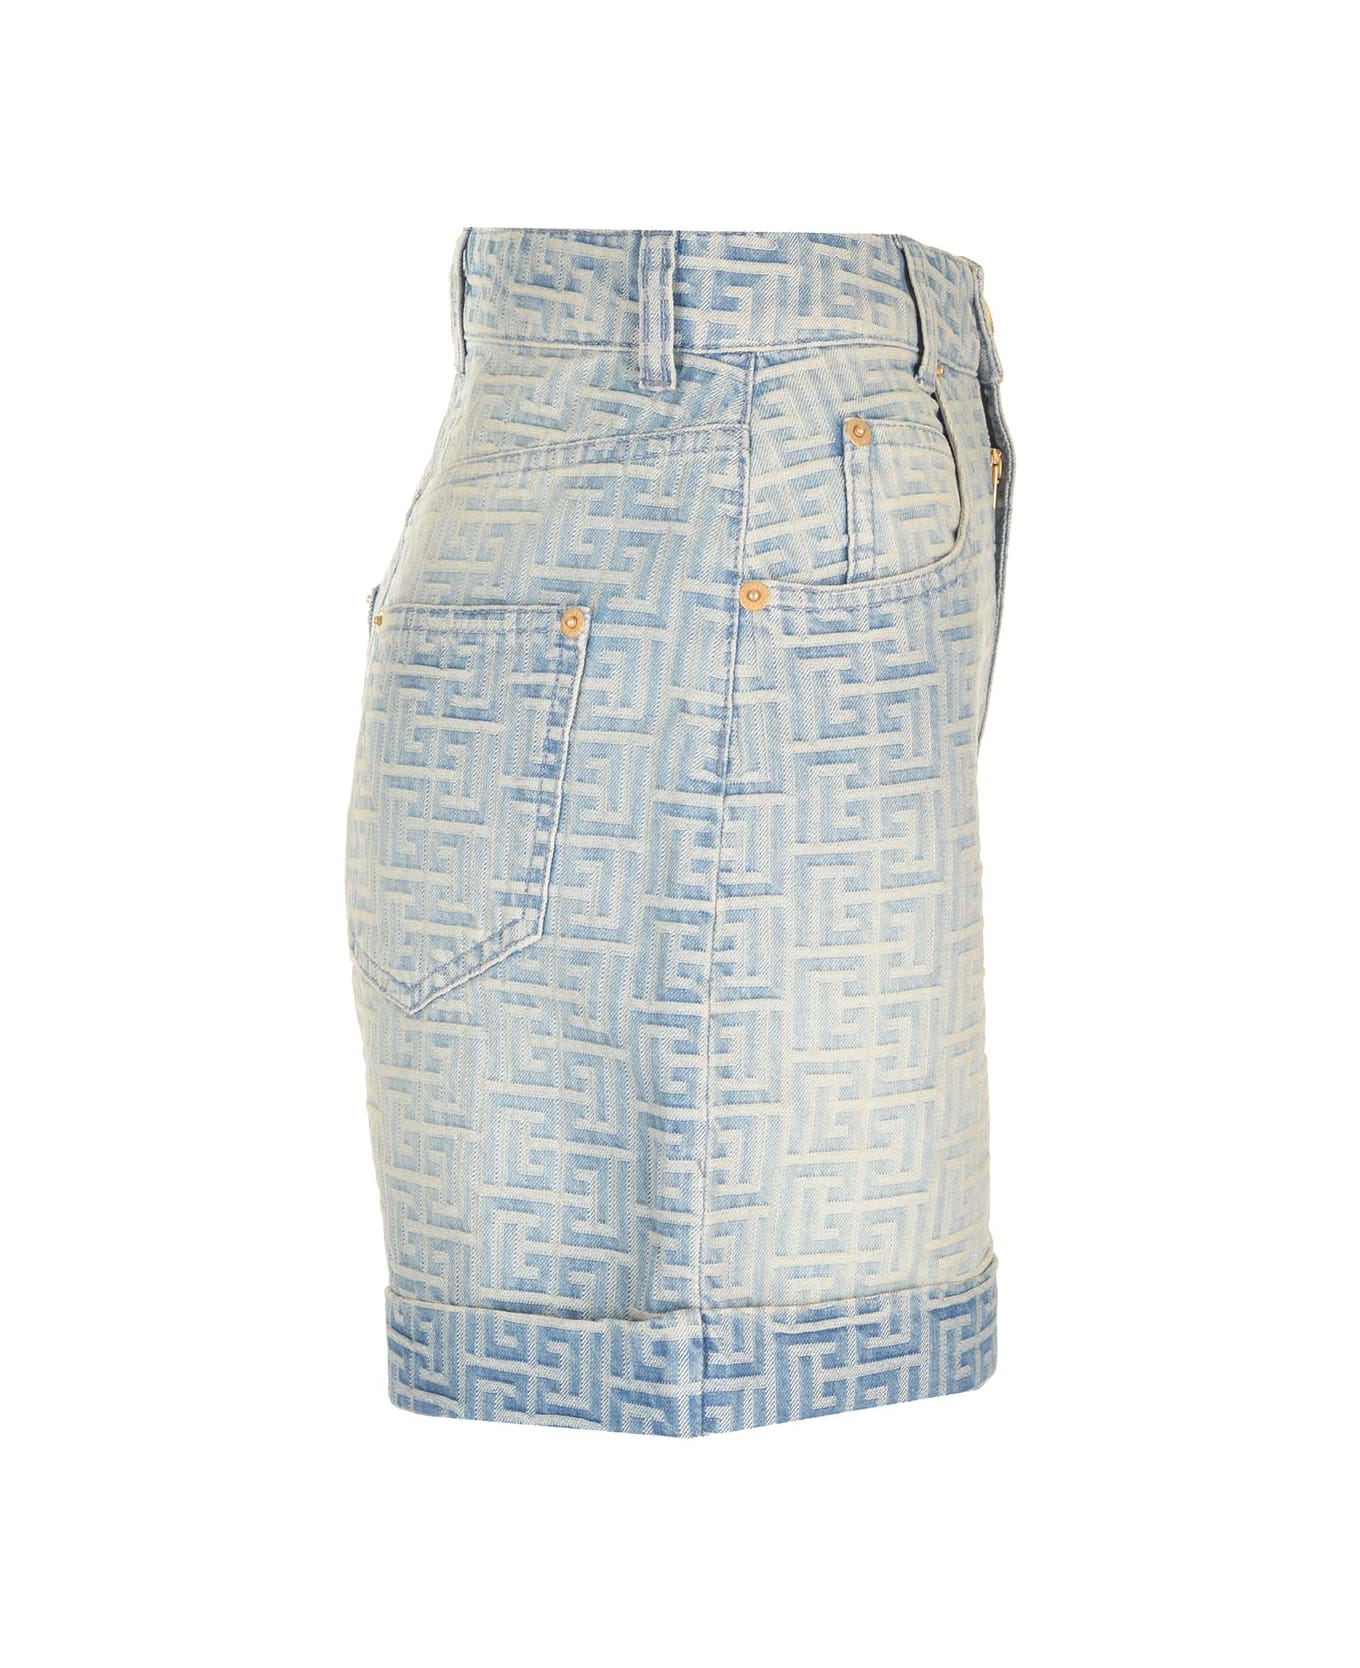 Balmain High-waisted Shorts - Light blue ショートパンツ